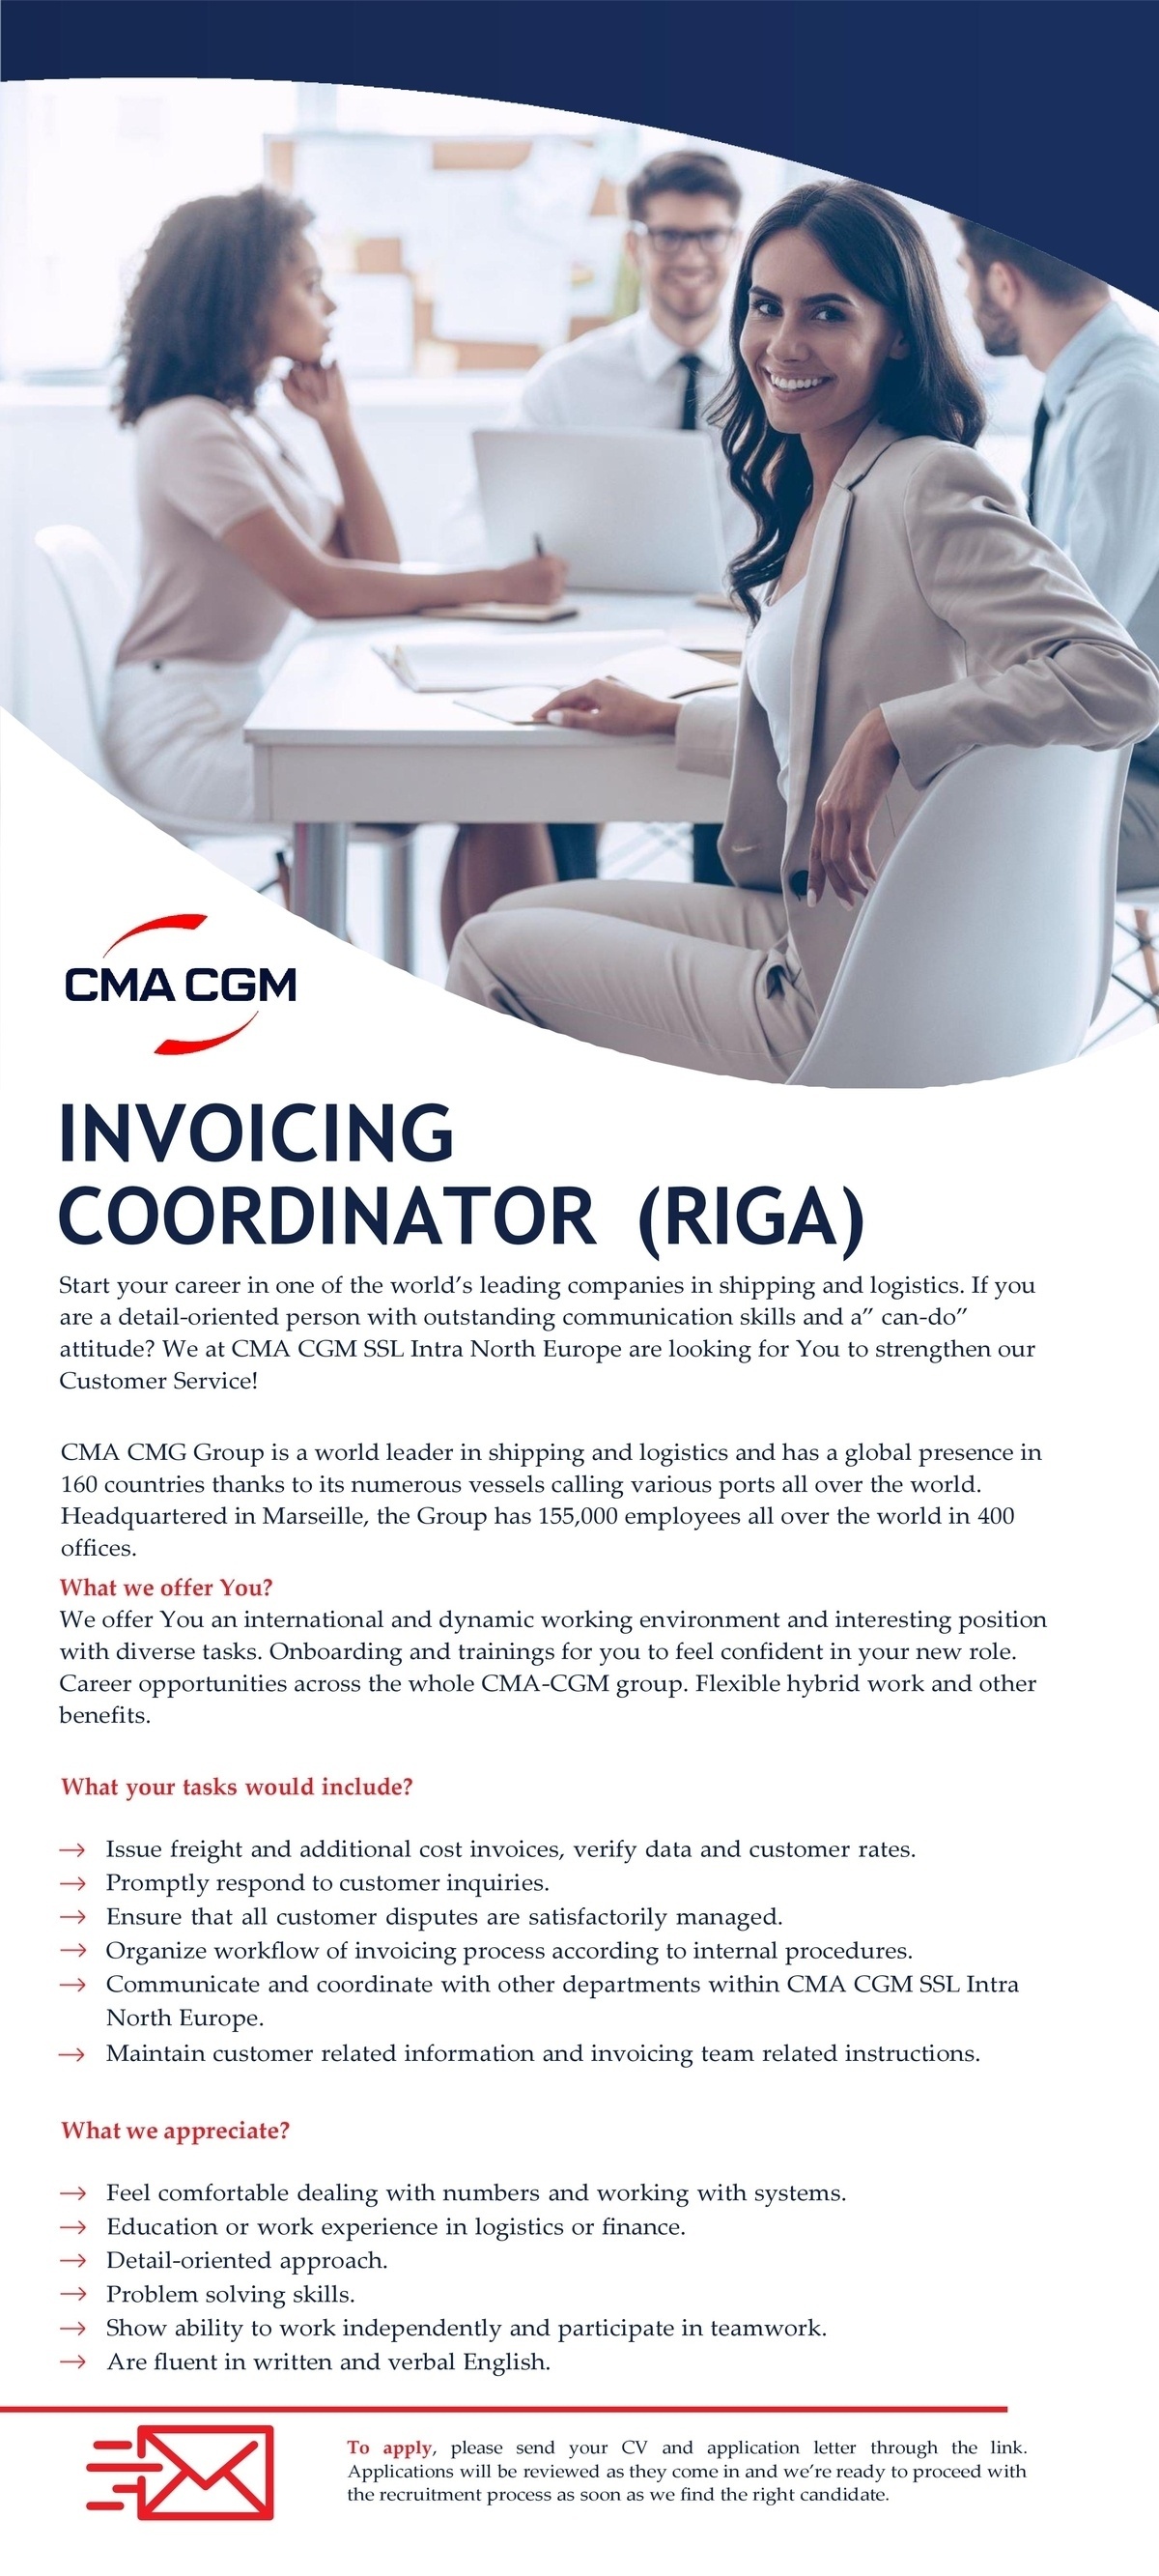 CMA CGM Global Business Services Latvia Invoicing Coordinator